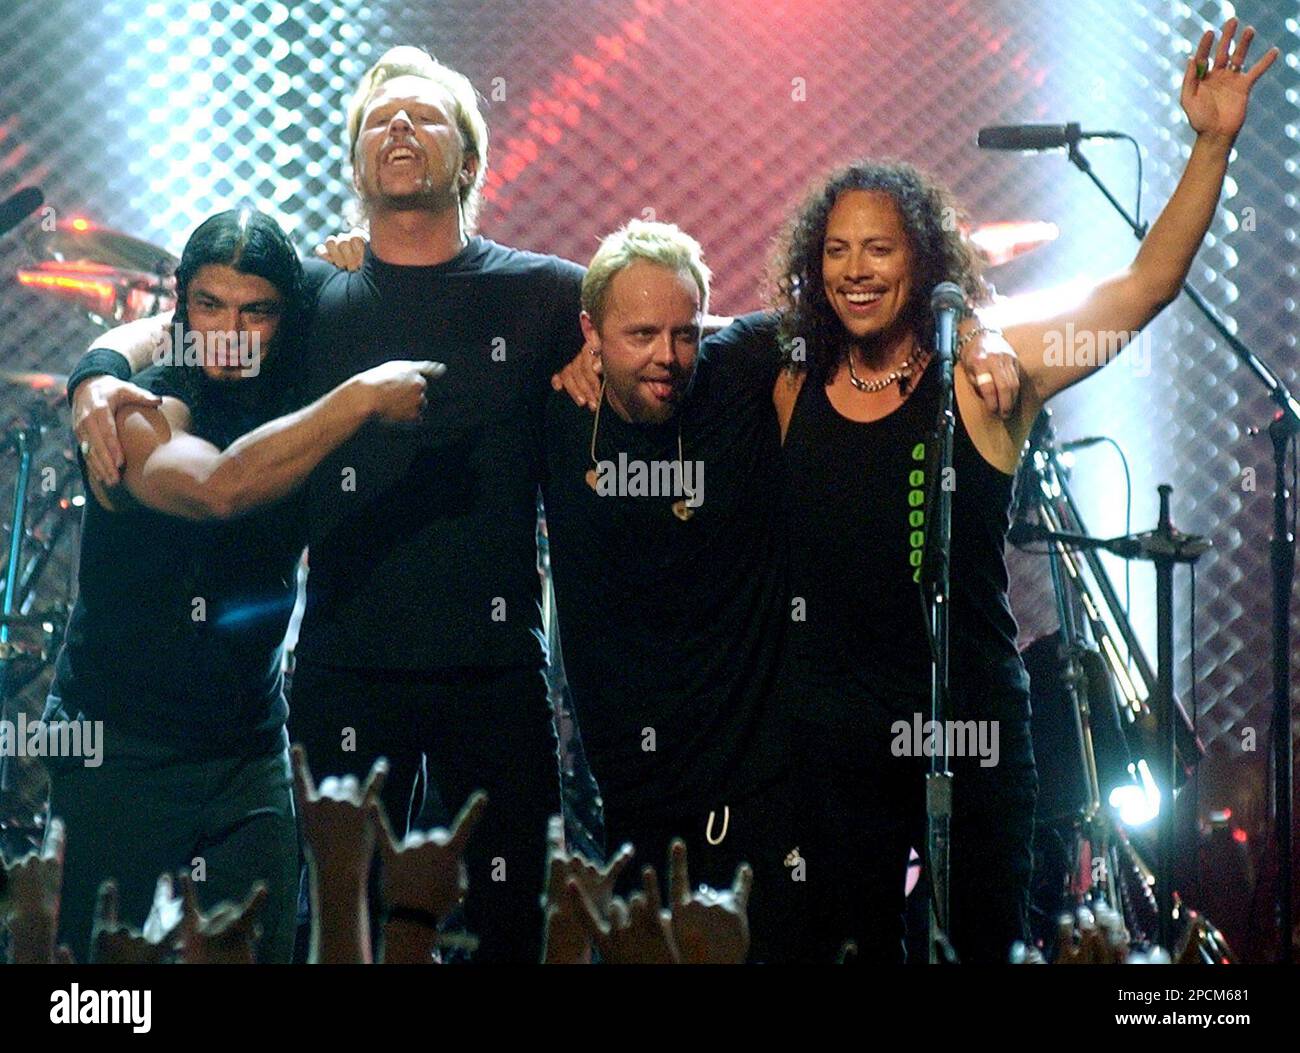 James Hetfield Limited Edition San Jose Sharks Jersey - Metallica